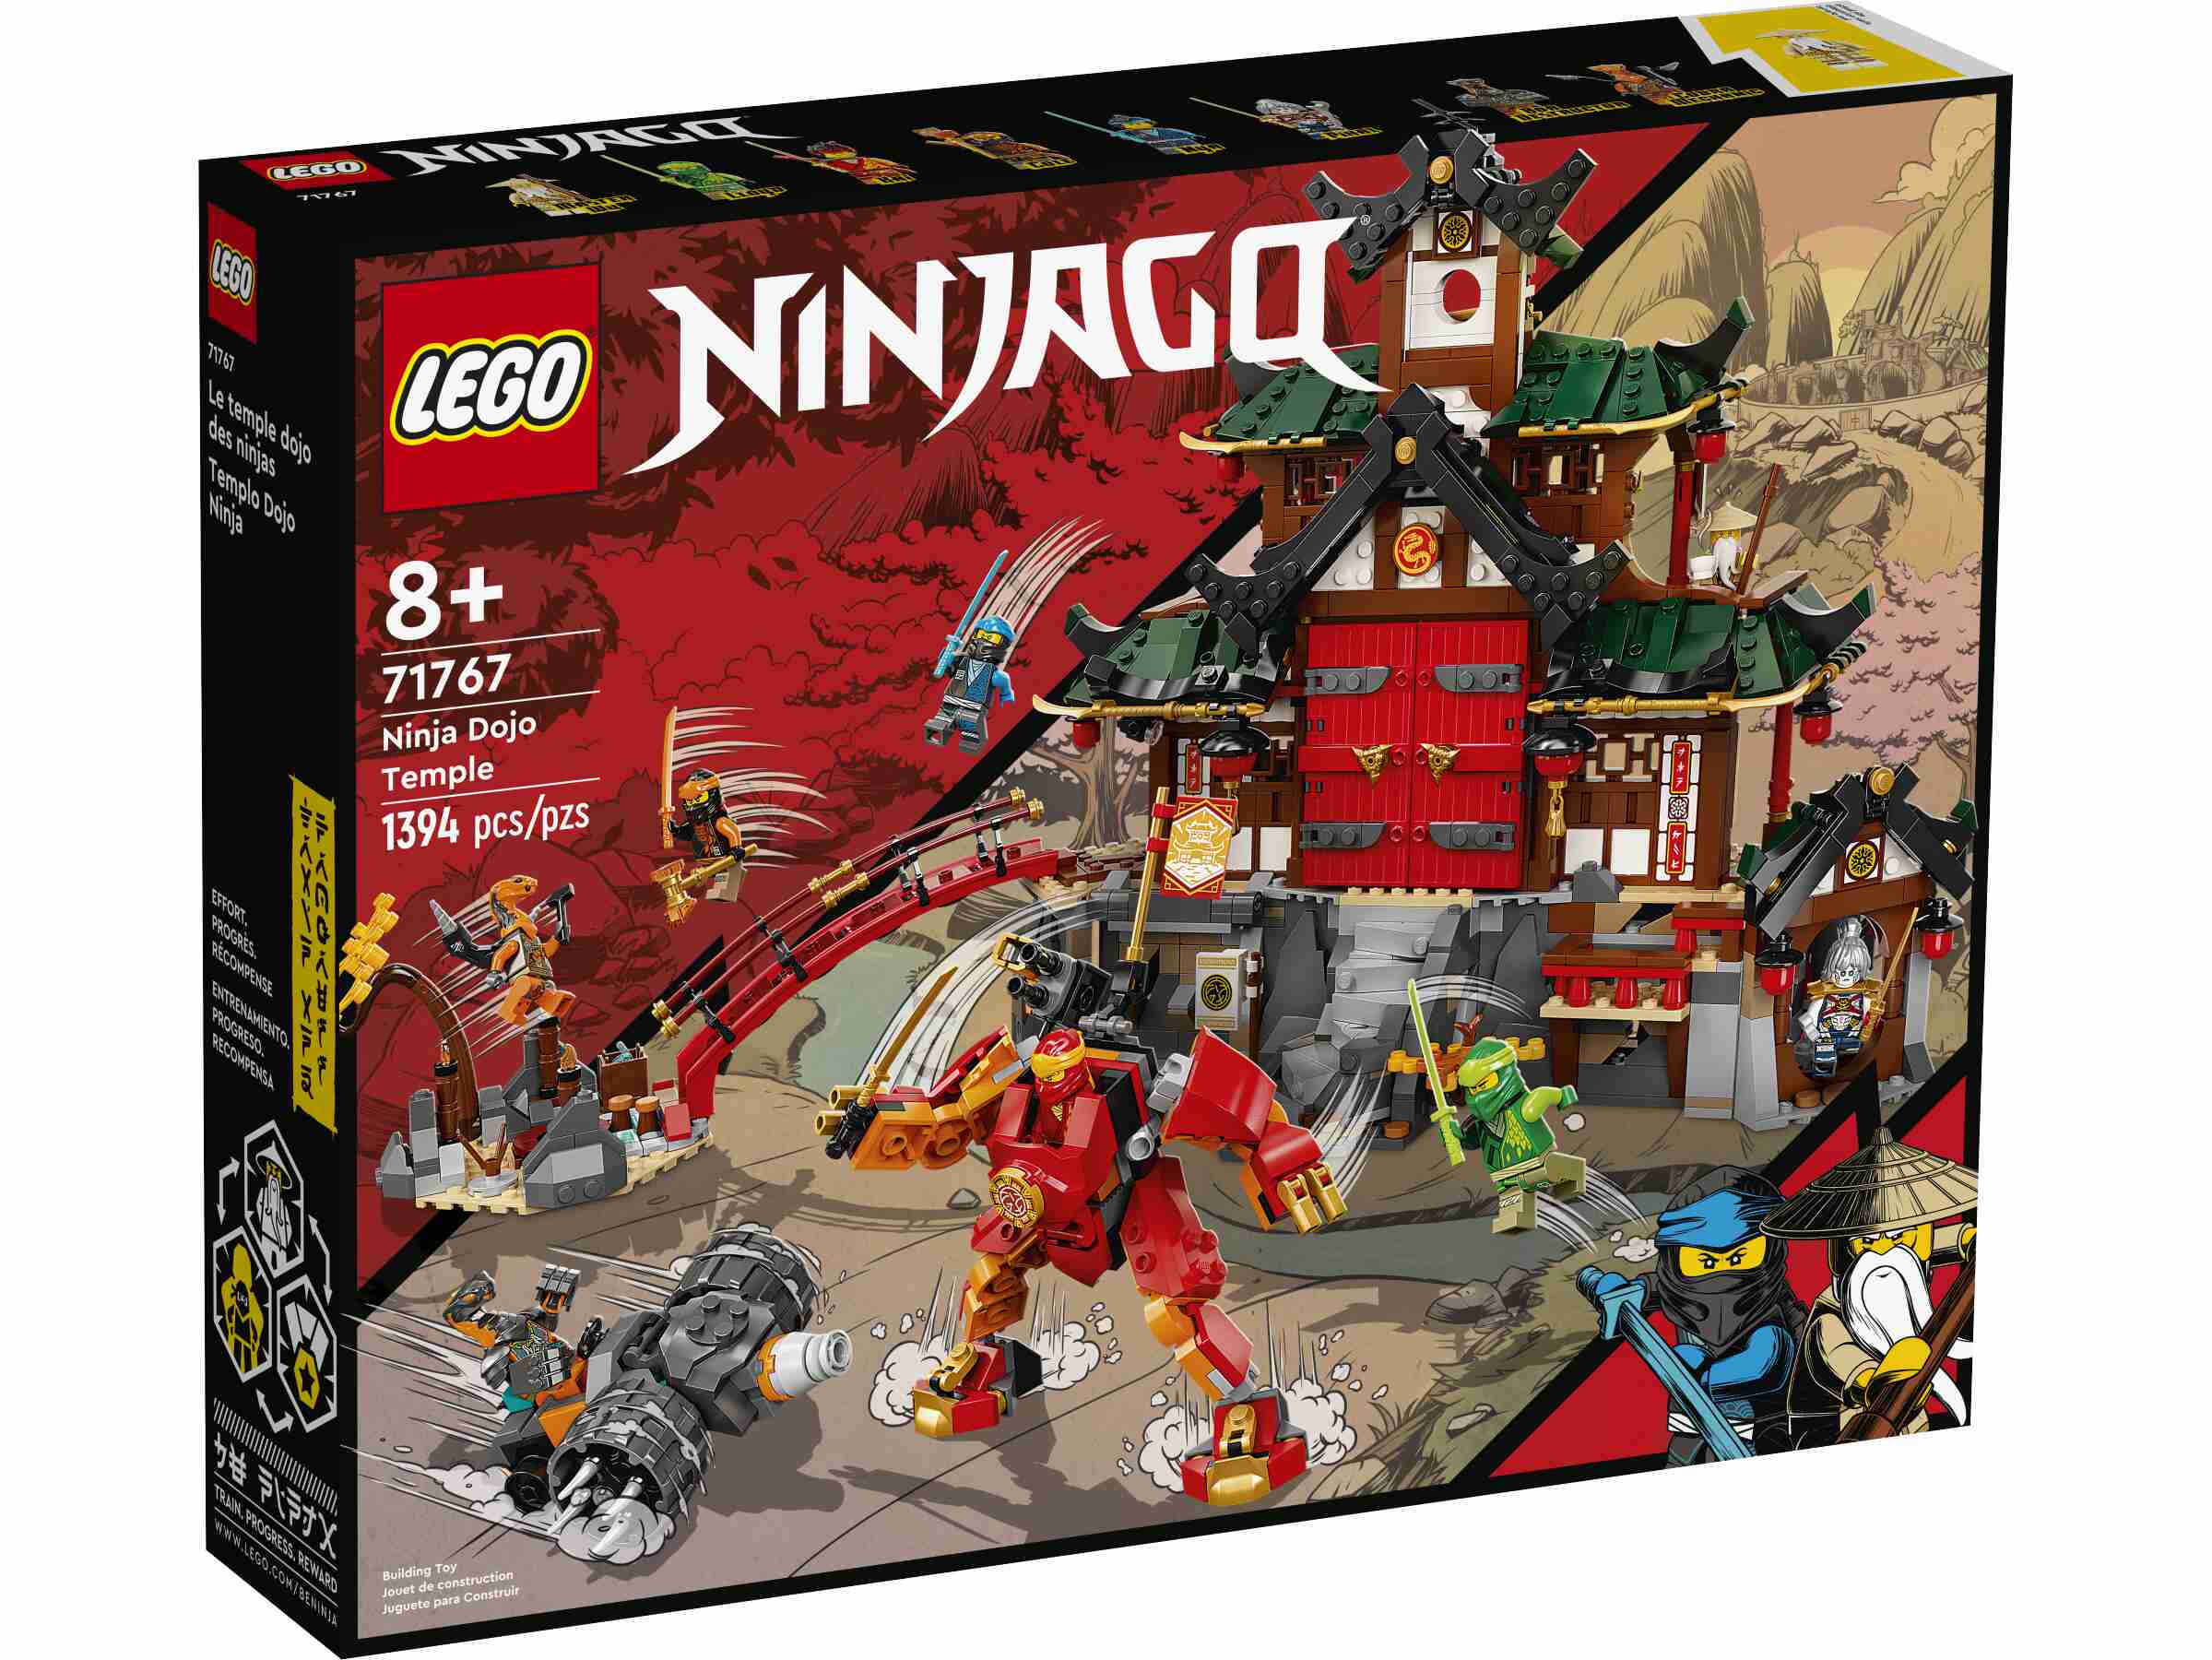 LEGO 71767 NINJAGO  Ninja-Dojotempel, 5 Räume, 8 Minifiguren